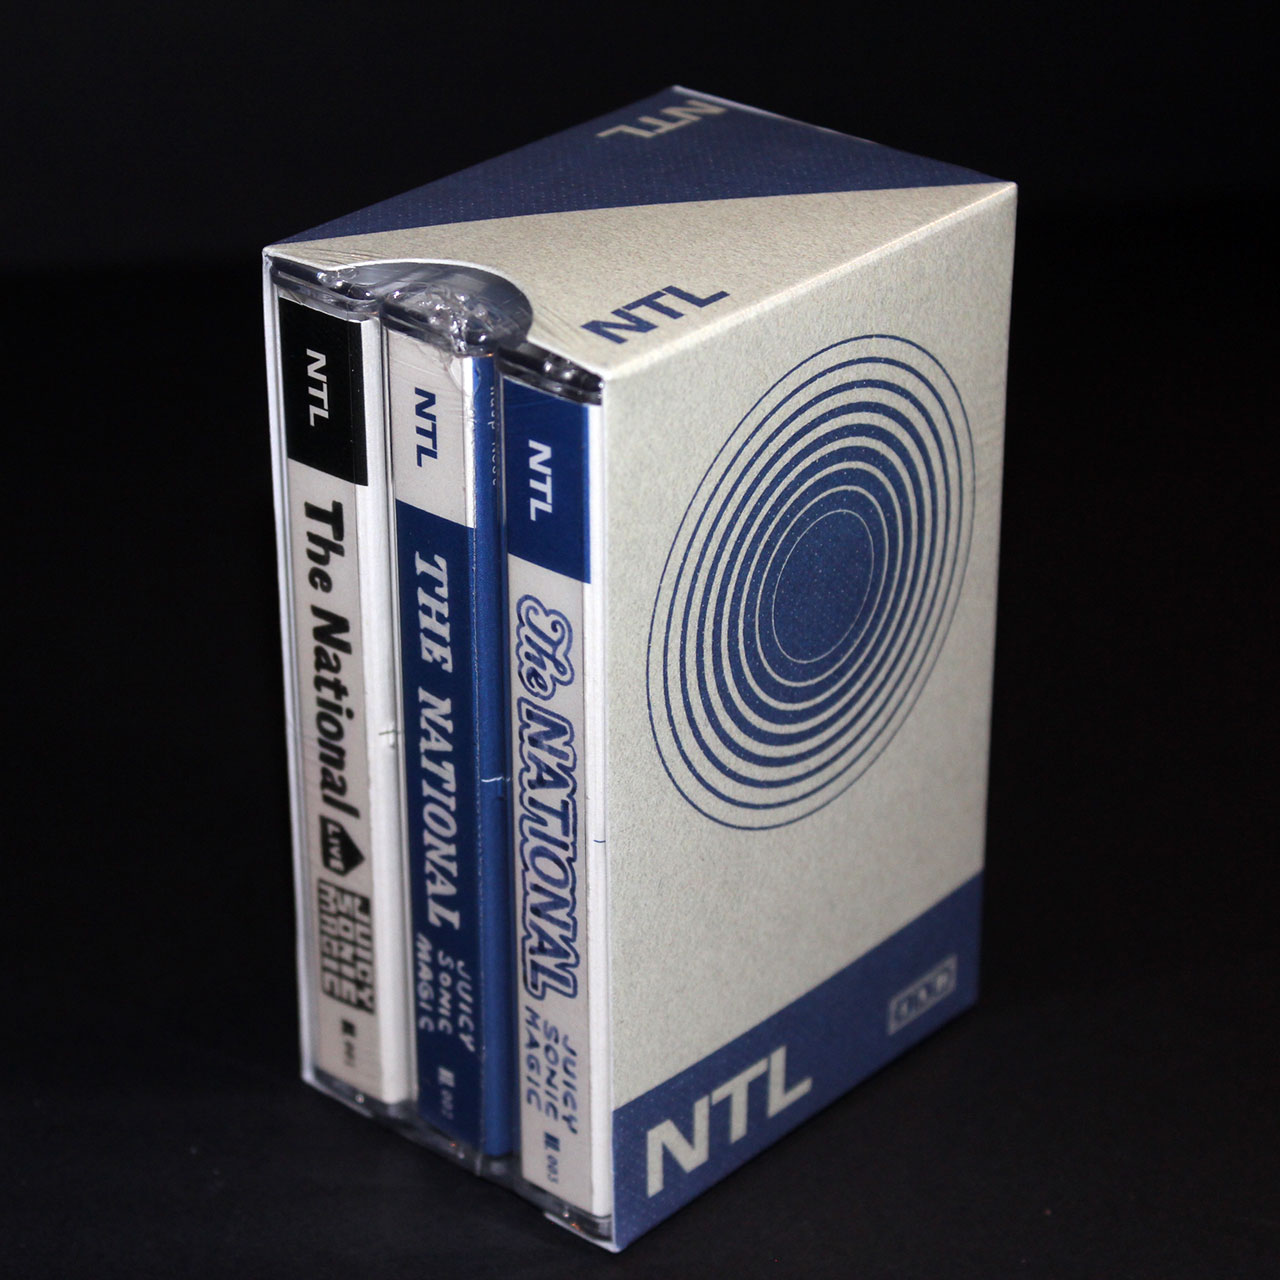 Printed Slipcase for 3 Audio Cassettes